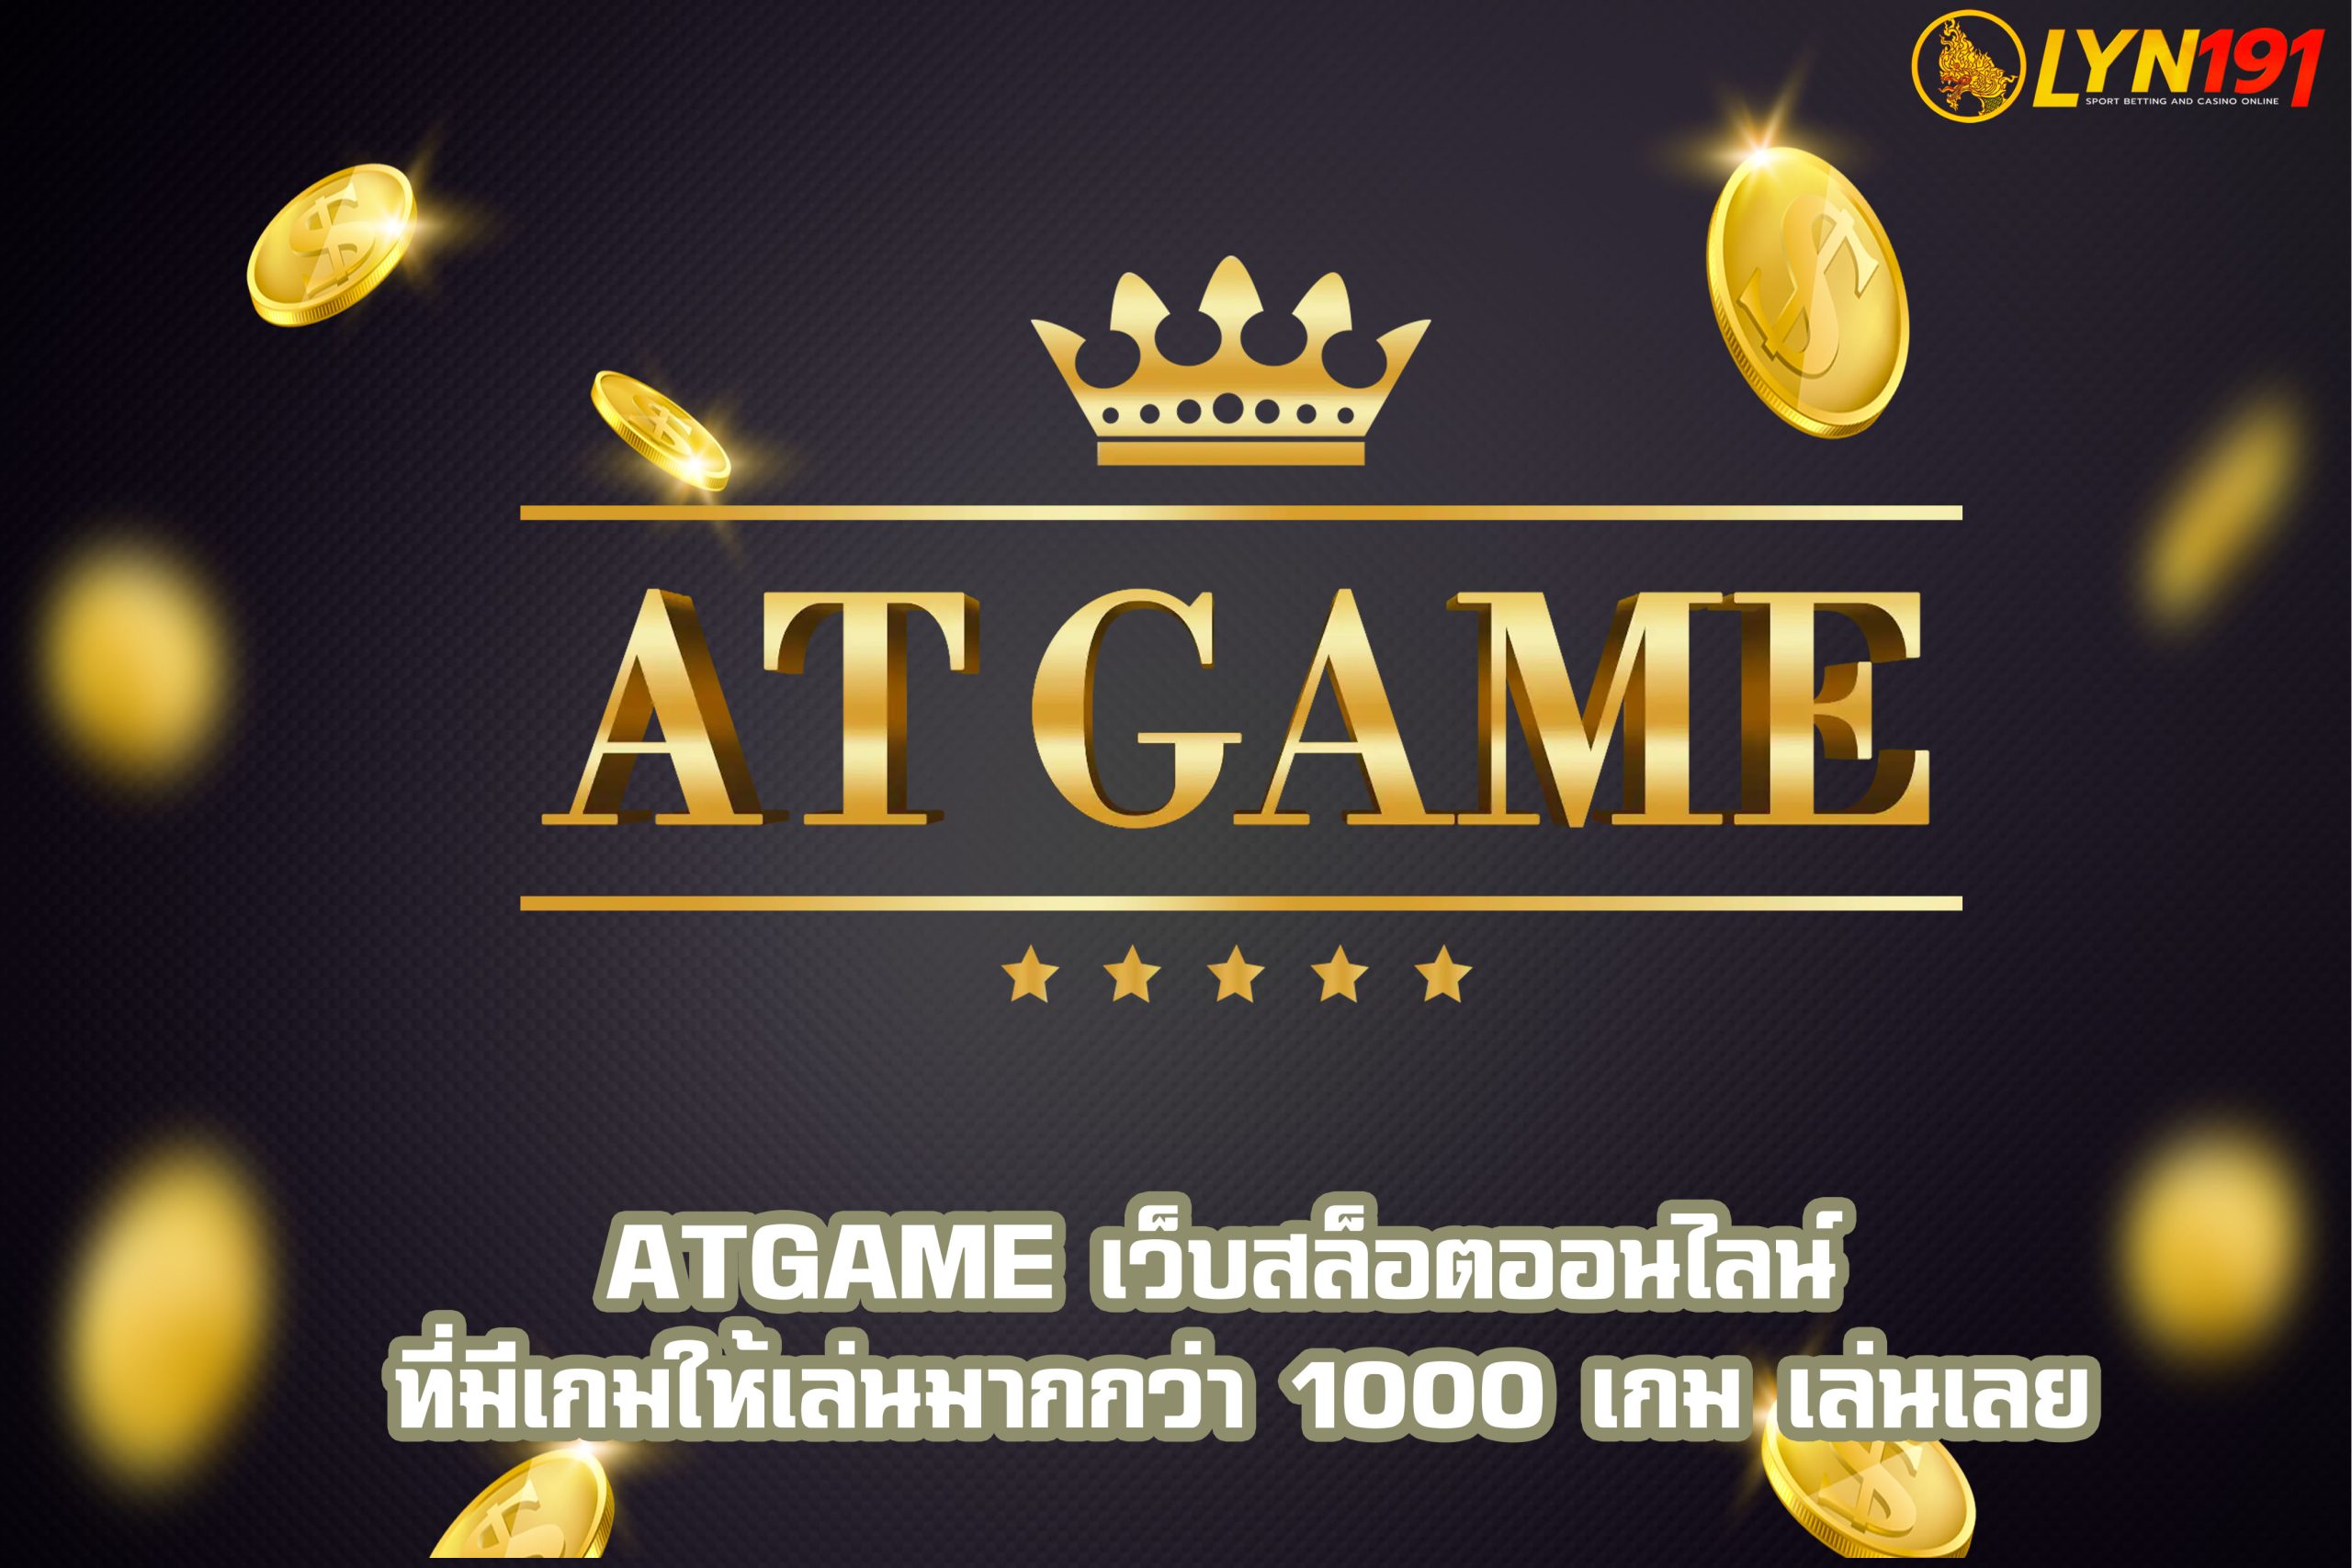 ATGAME เว็บสล็อตออนไลน์ ที่มีเกมให้เล่นมากกว่า 1000 เกม เล่นเลย